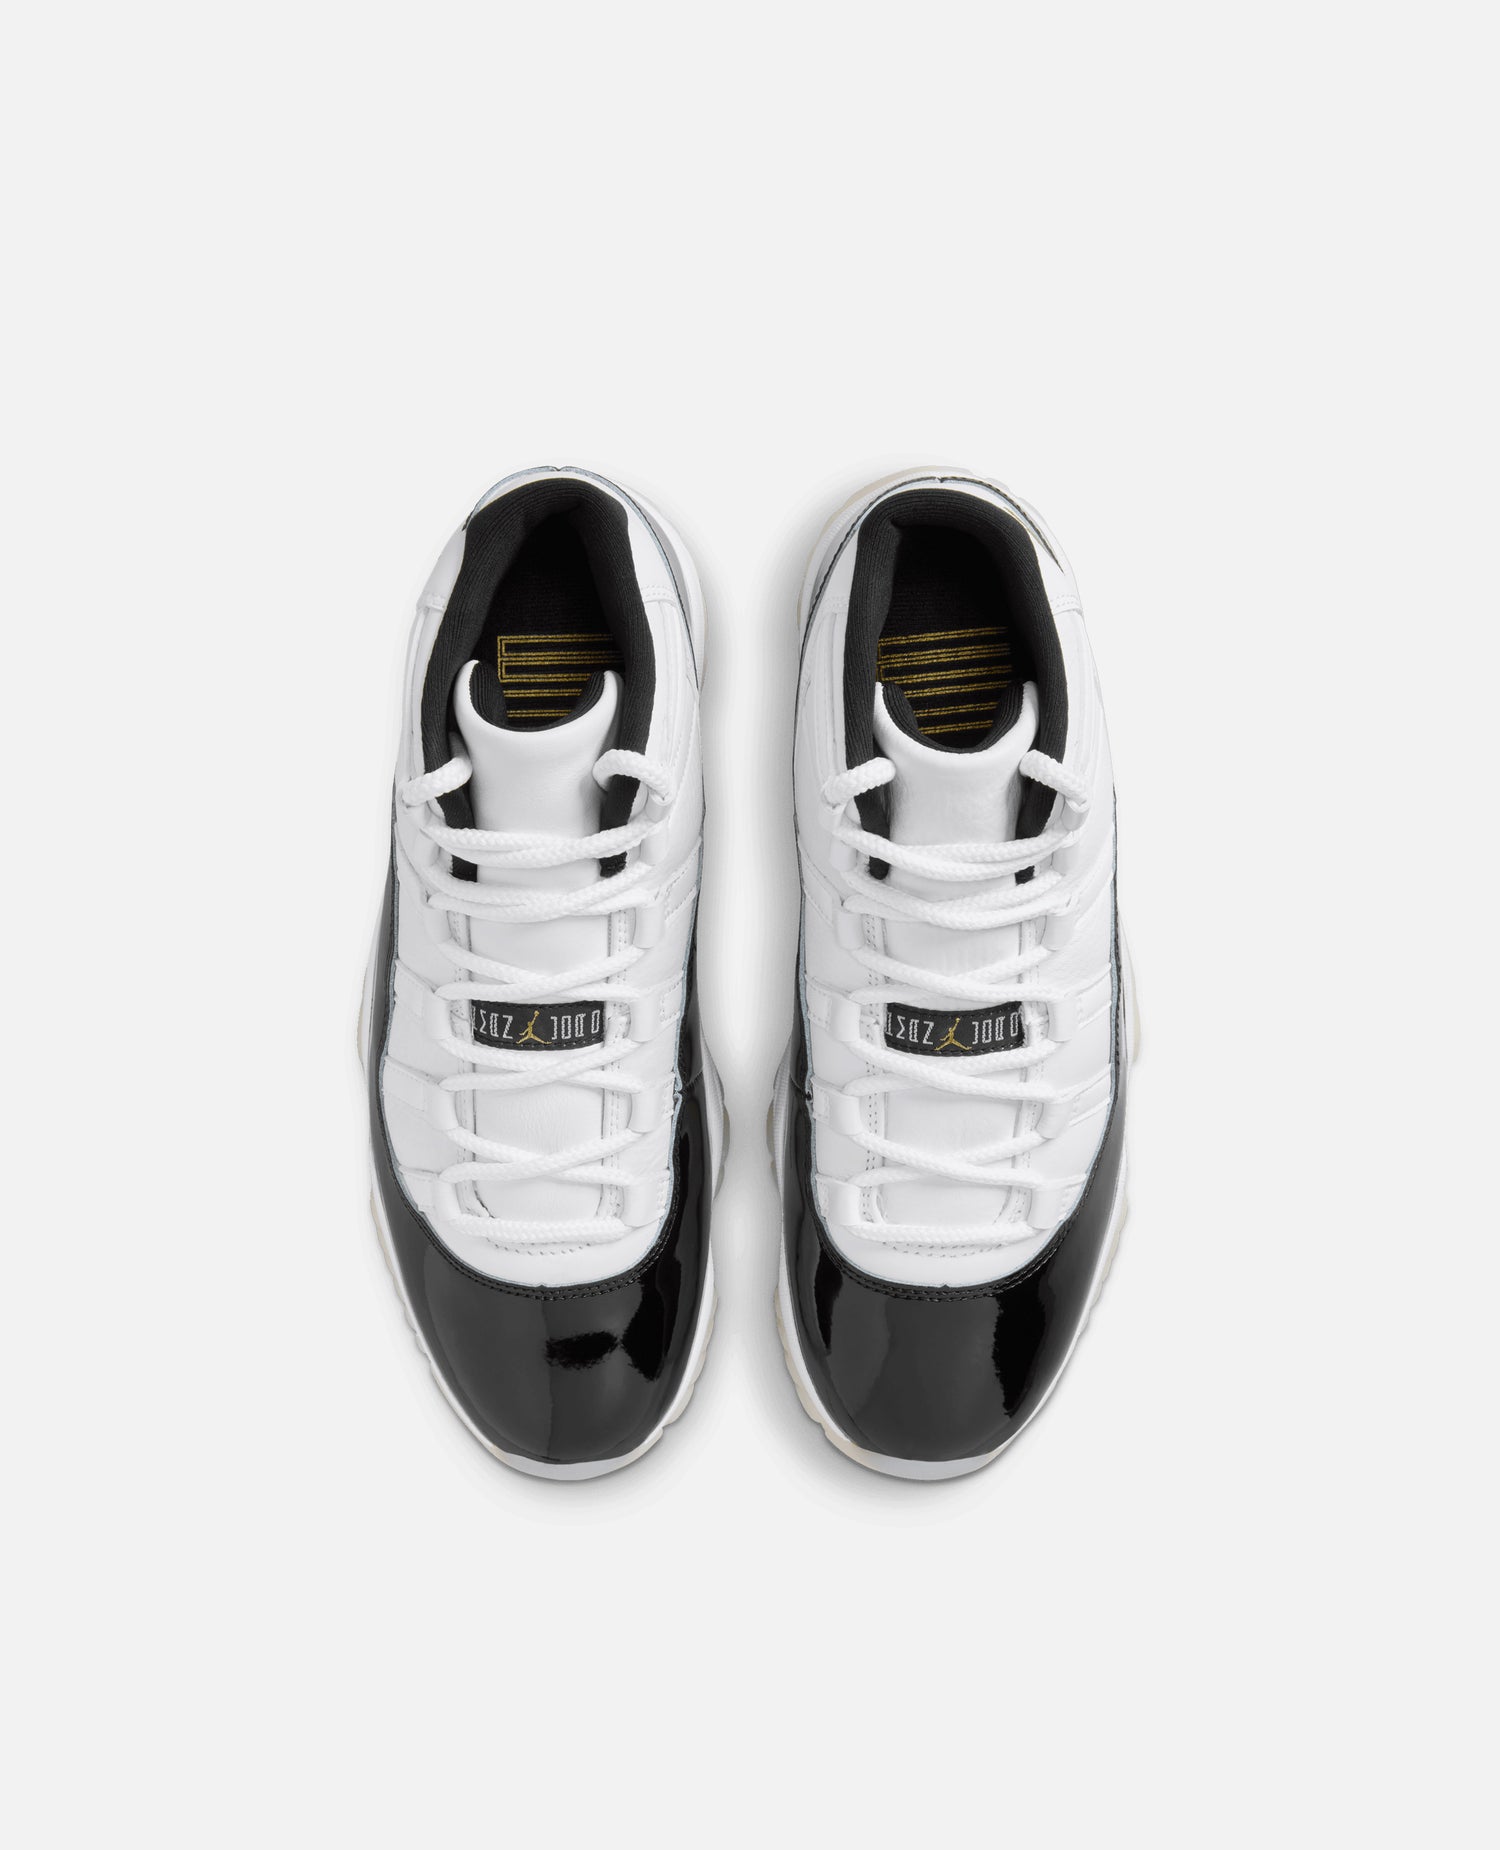 Air Jordan 11 Retro (White/Metallic Gold-Black)